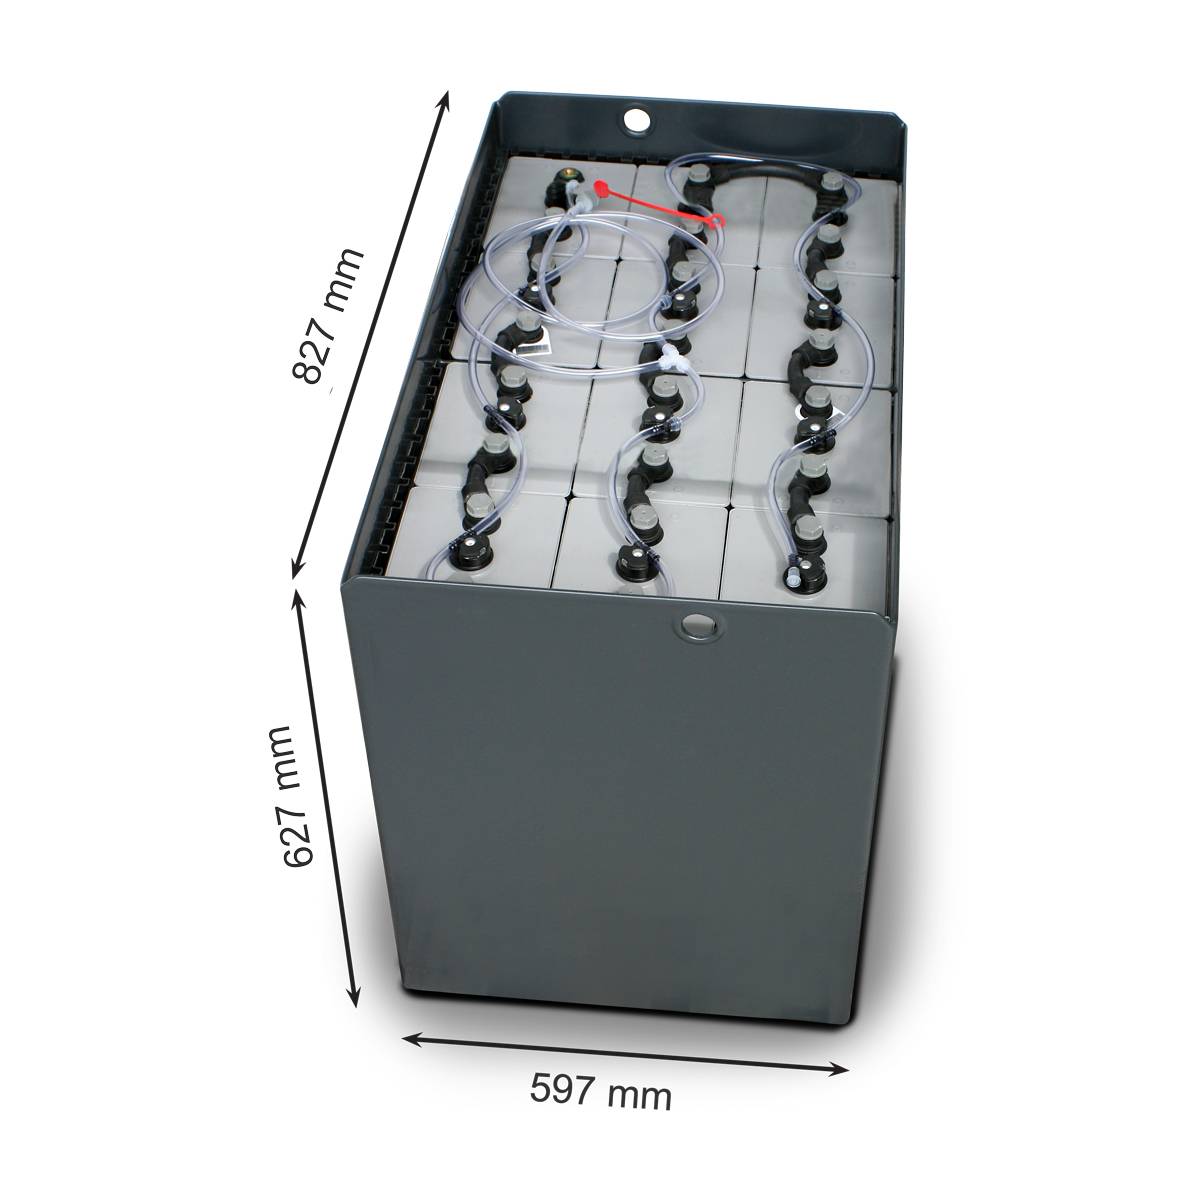 24V Gabelstaplerbatterie 10 PzS 1250 Ah DIN A (827 * 597 * 627mm L/B/H) Trog 57014041 inkl. Aquamatik von Q-Batteries